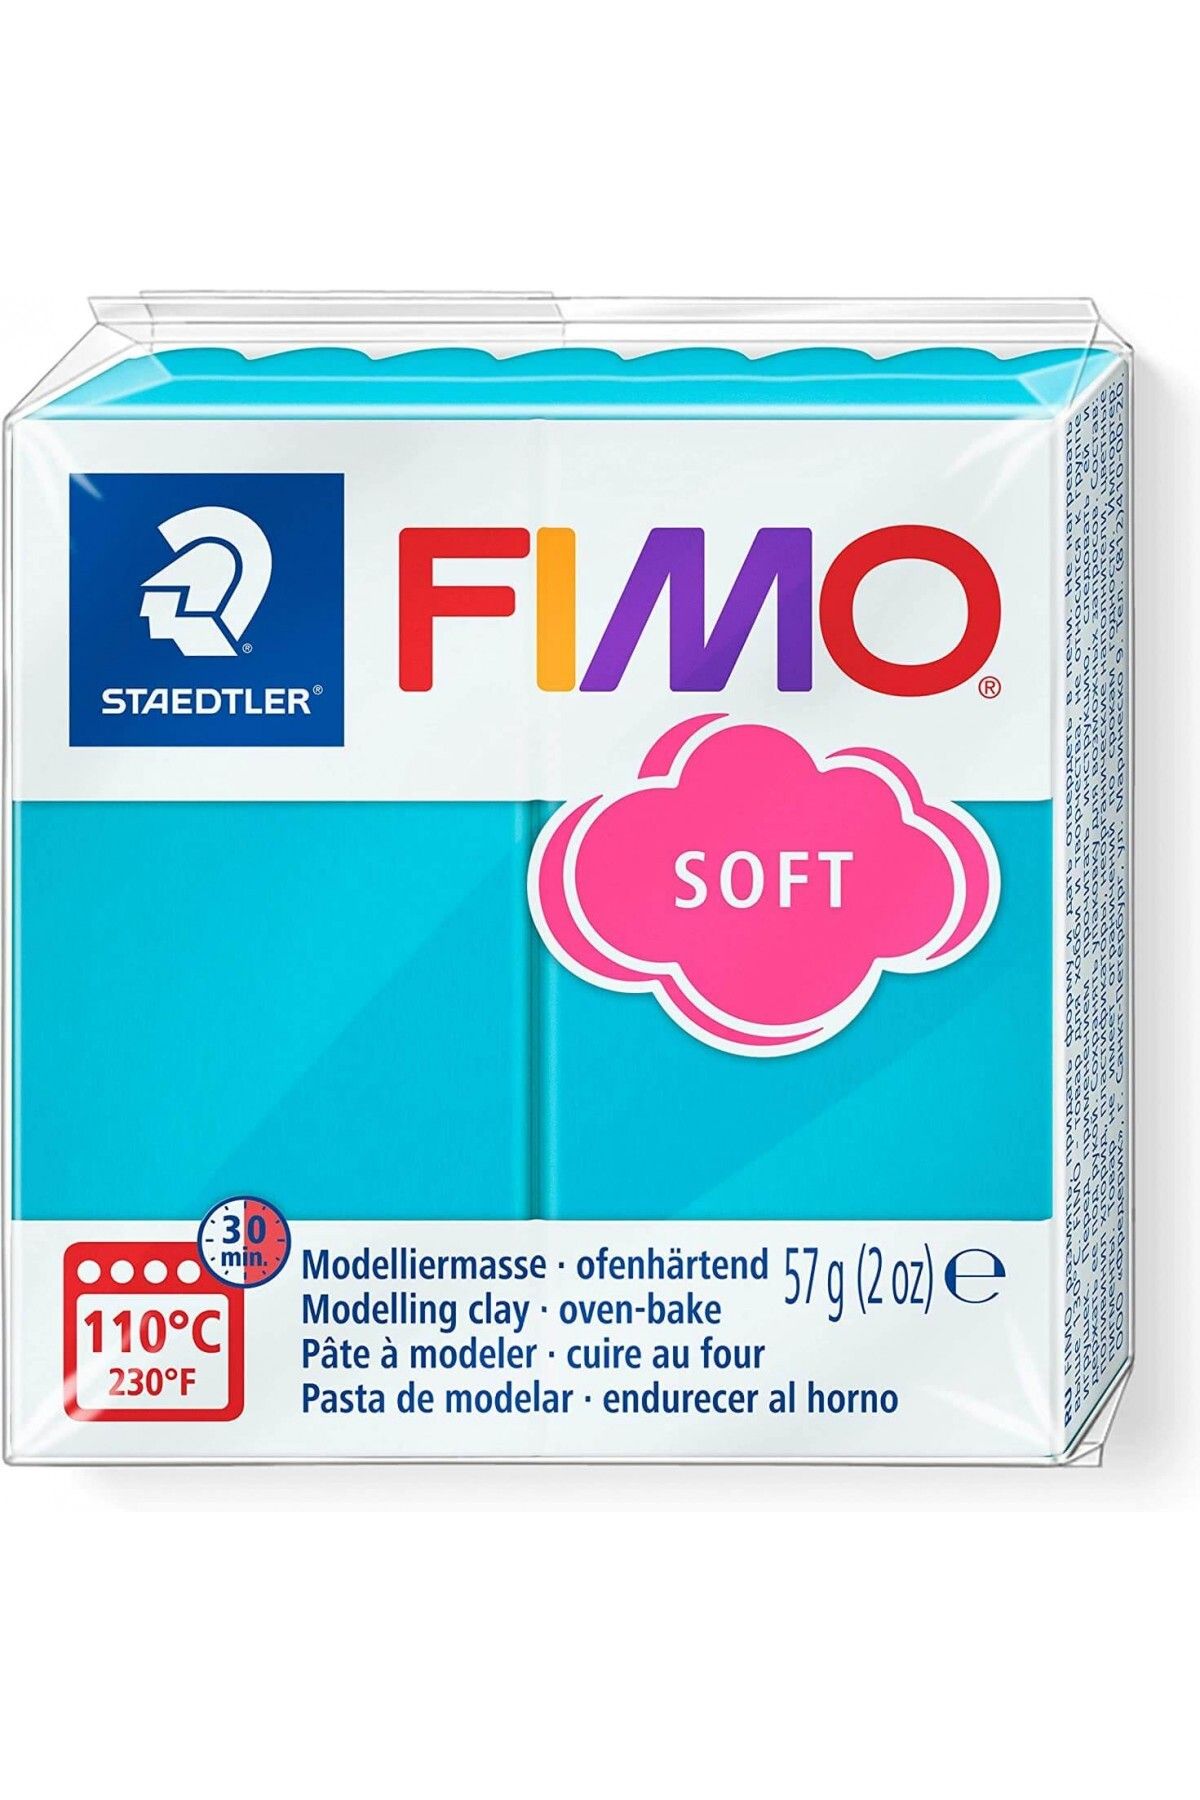 Staedtler Fimo Polimer Kil 57gr Soft Modelleme Kili Nane / 8020-39 07